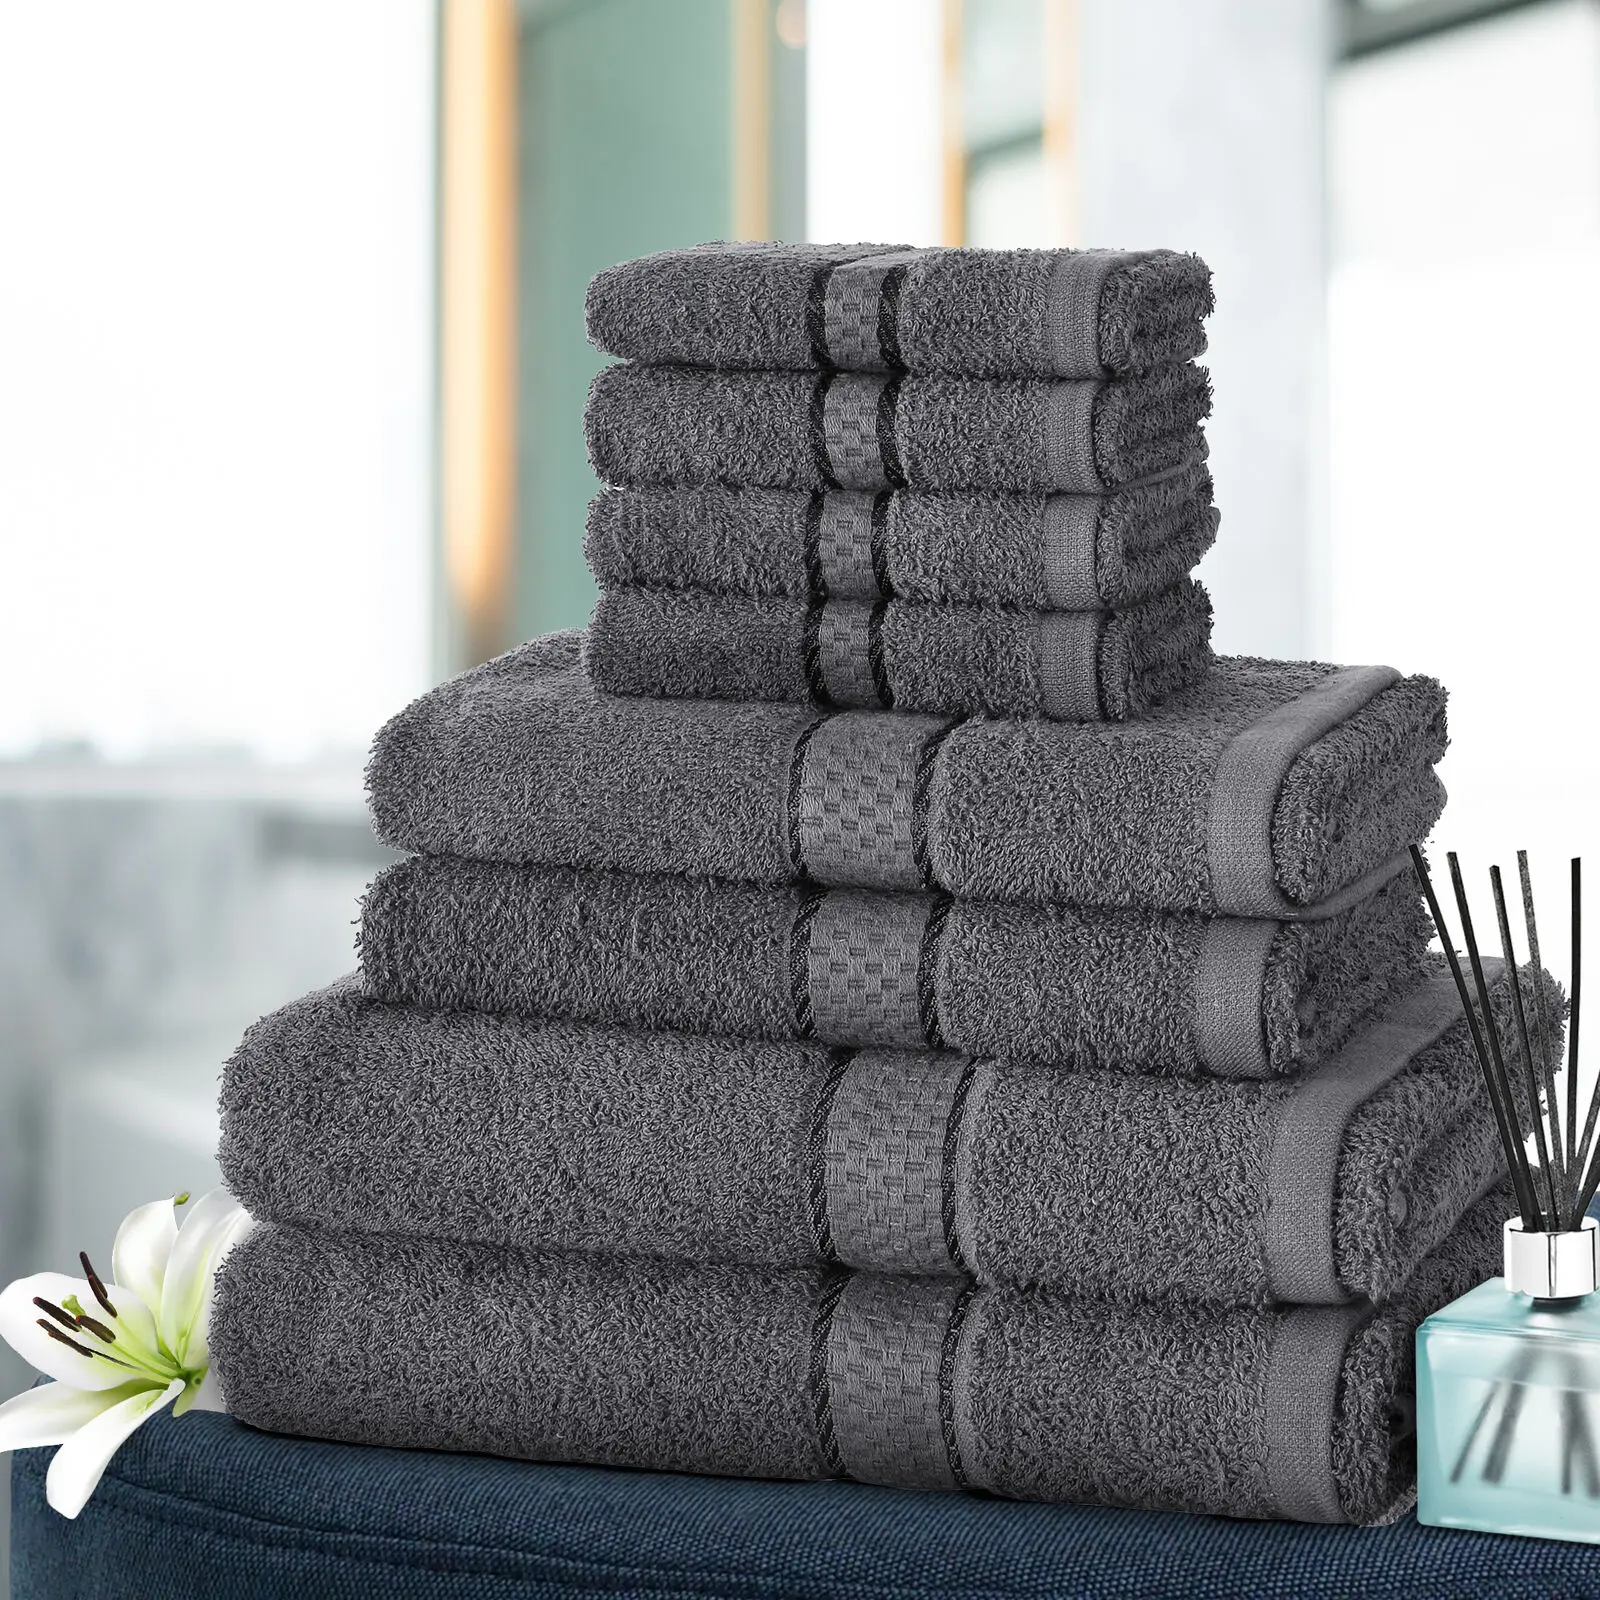 New Luxury Towel Bale Set 100% Cotton Face Hand Bath Bathroom Towels Pack of 8 